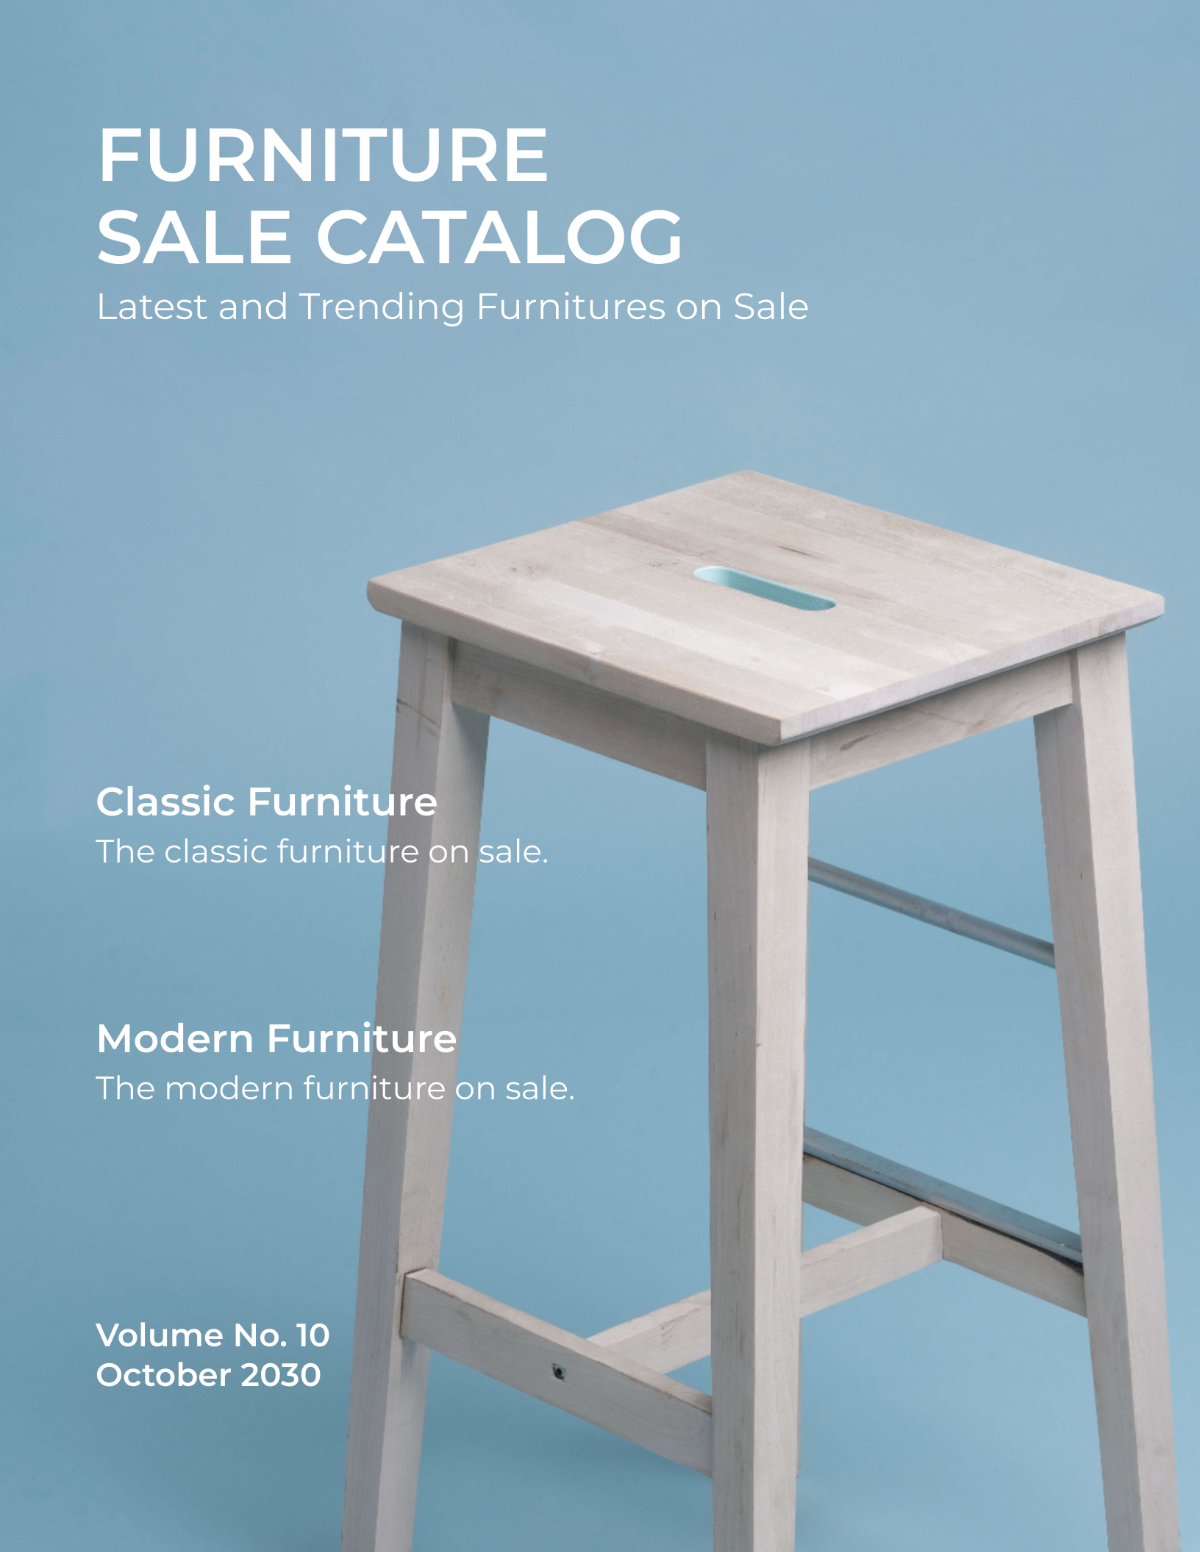 Furniture Sales Catalog Template